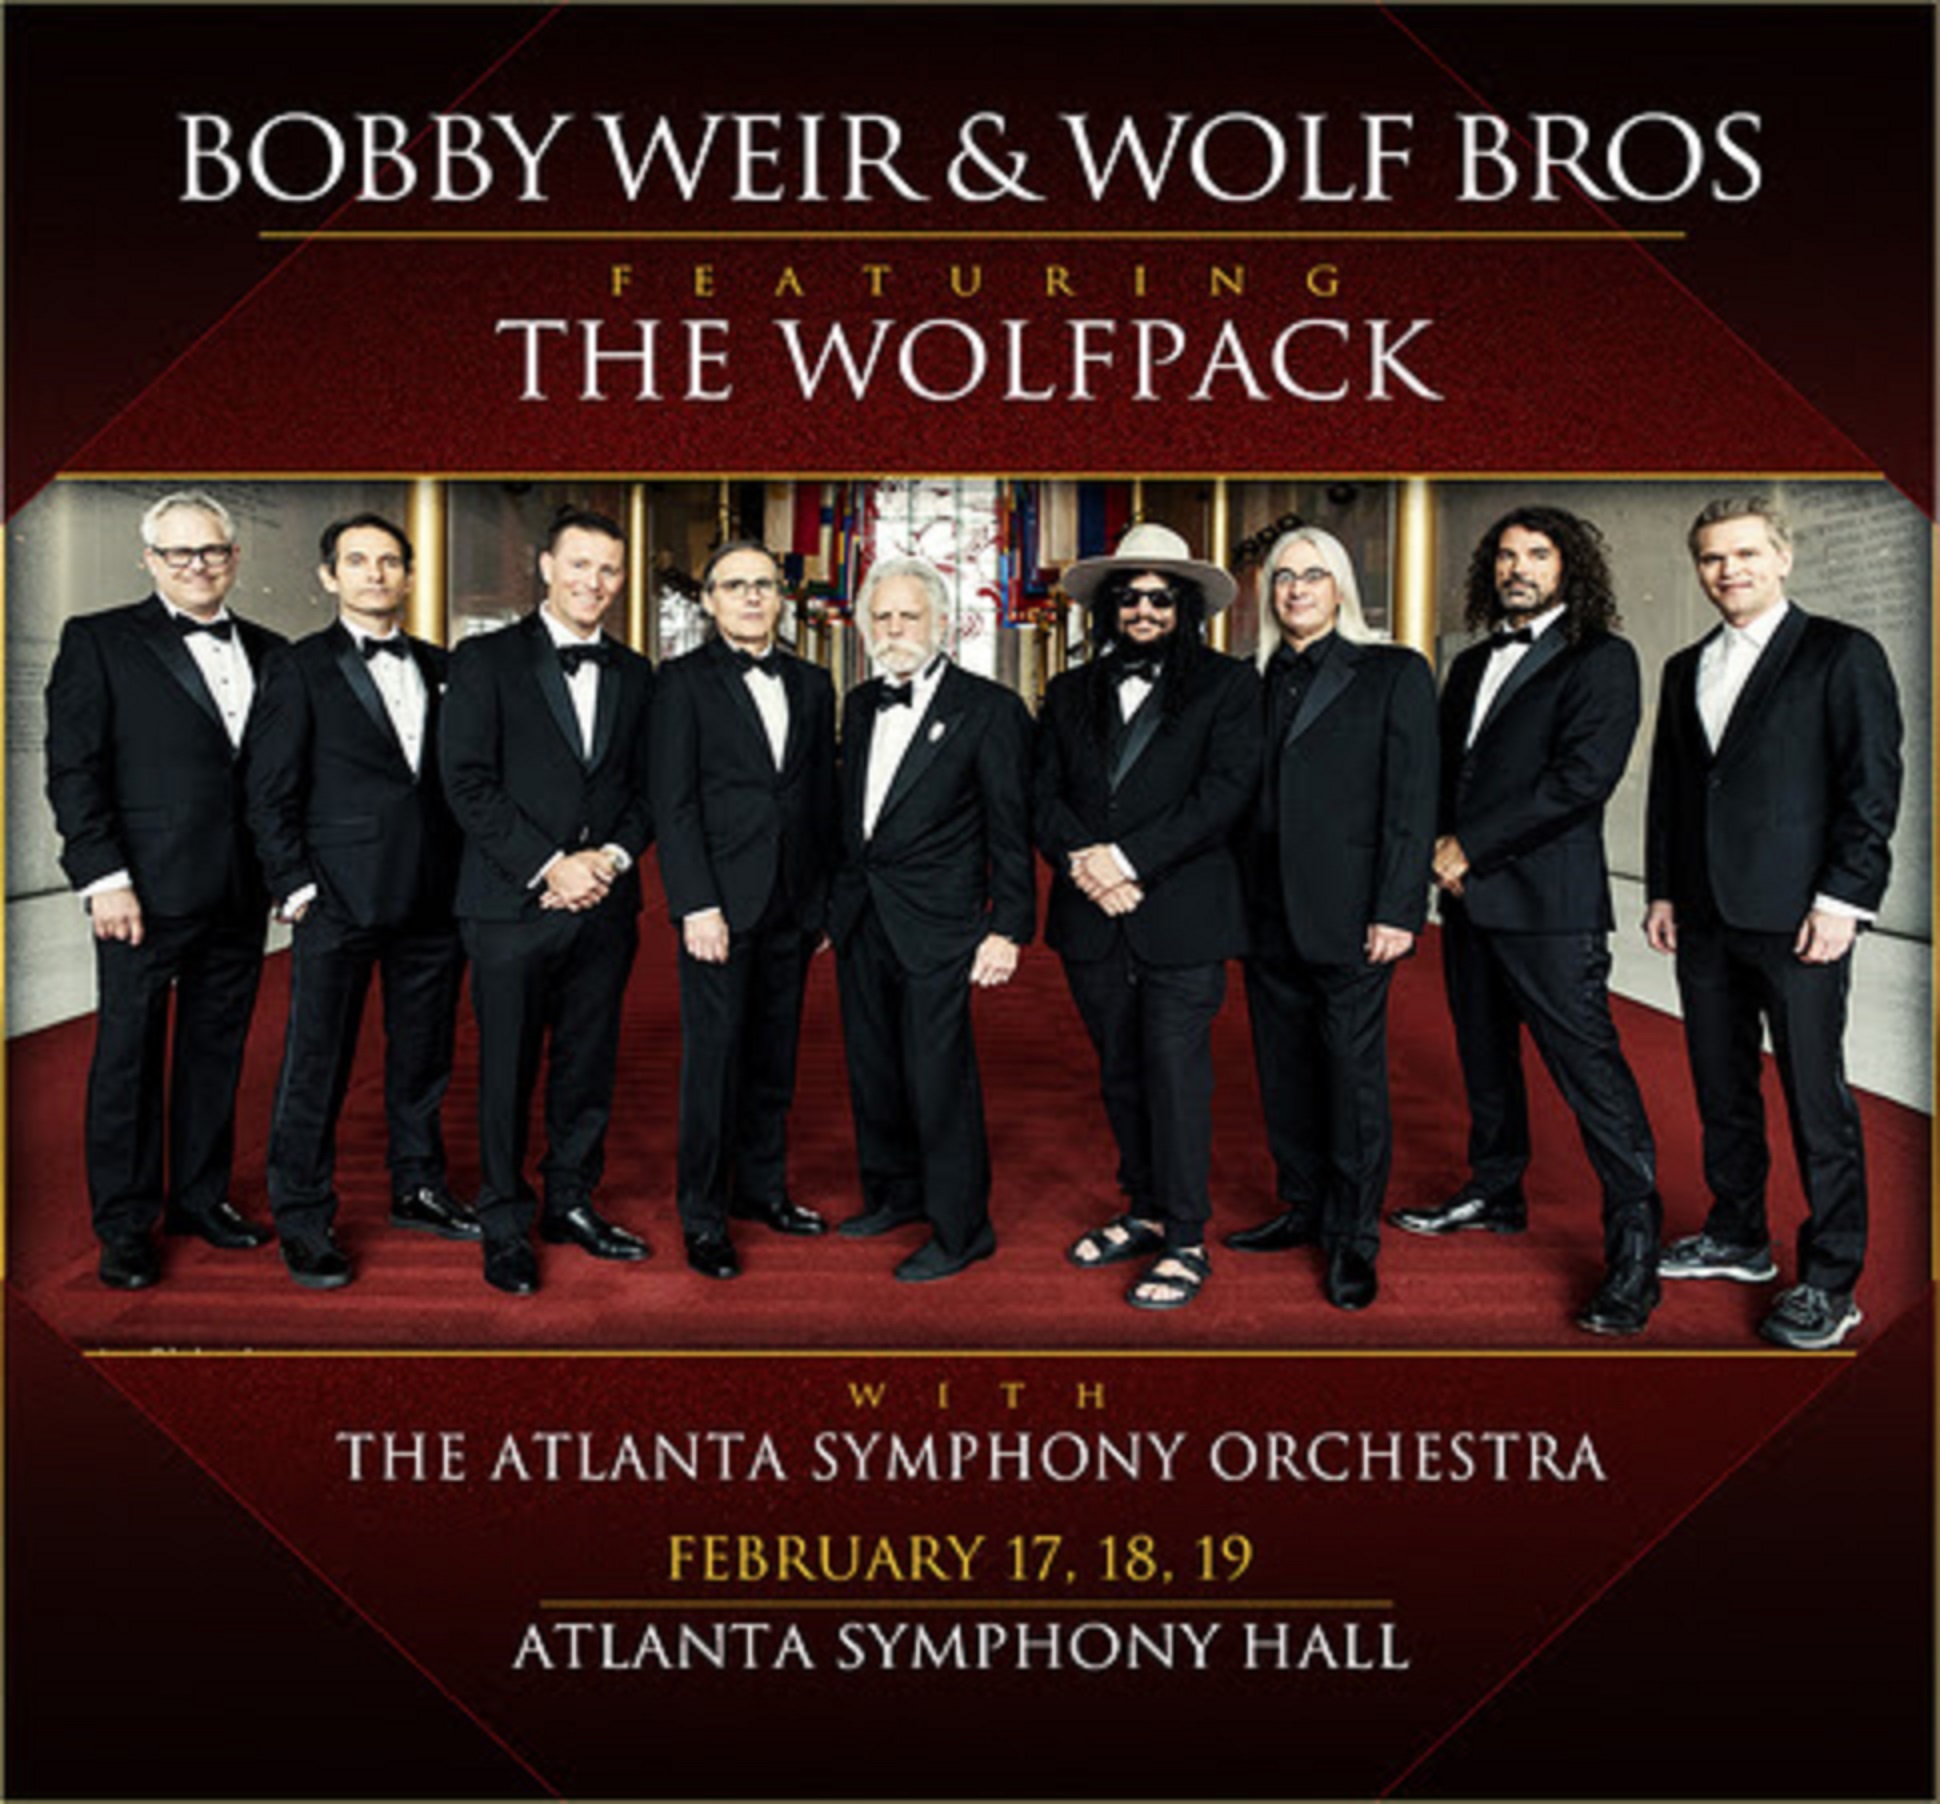 Bobby Weir & Wolf Bros confirm three shows with Atlanta Symphony Orchestra, February 17, 18 + 19